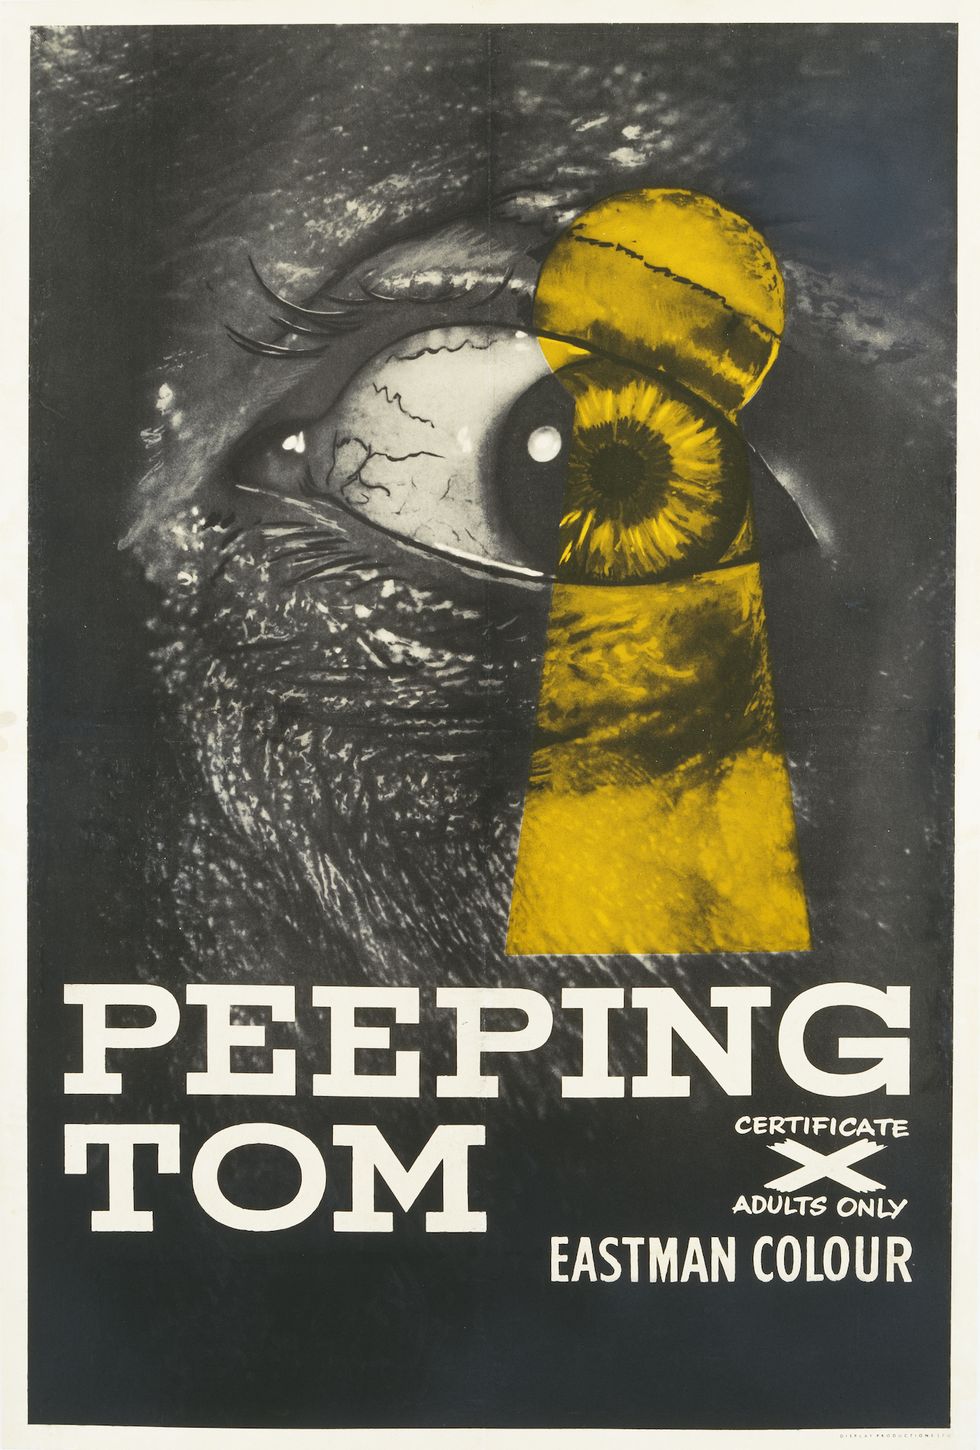 classic horror movies, peeping tom